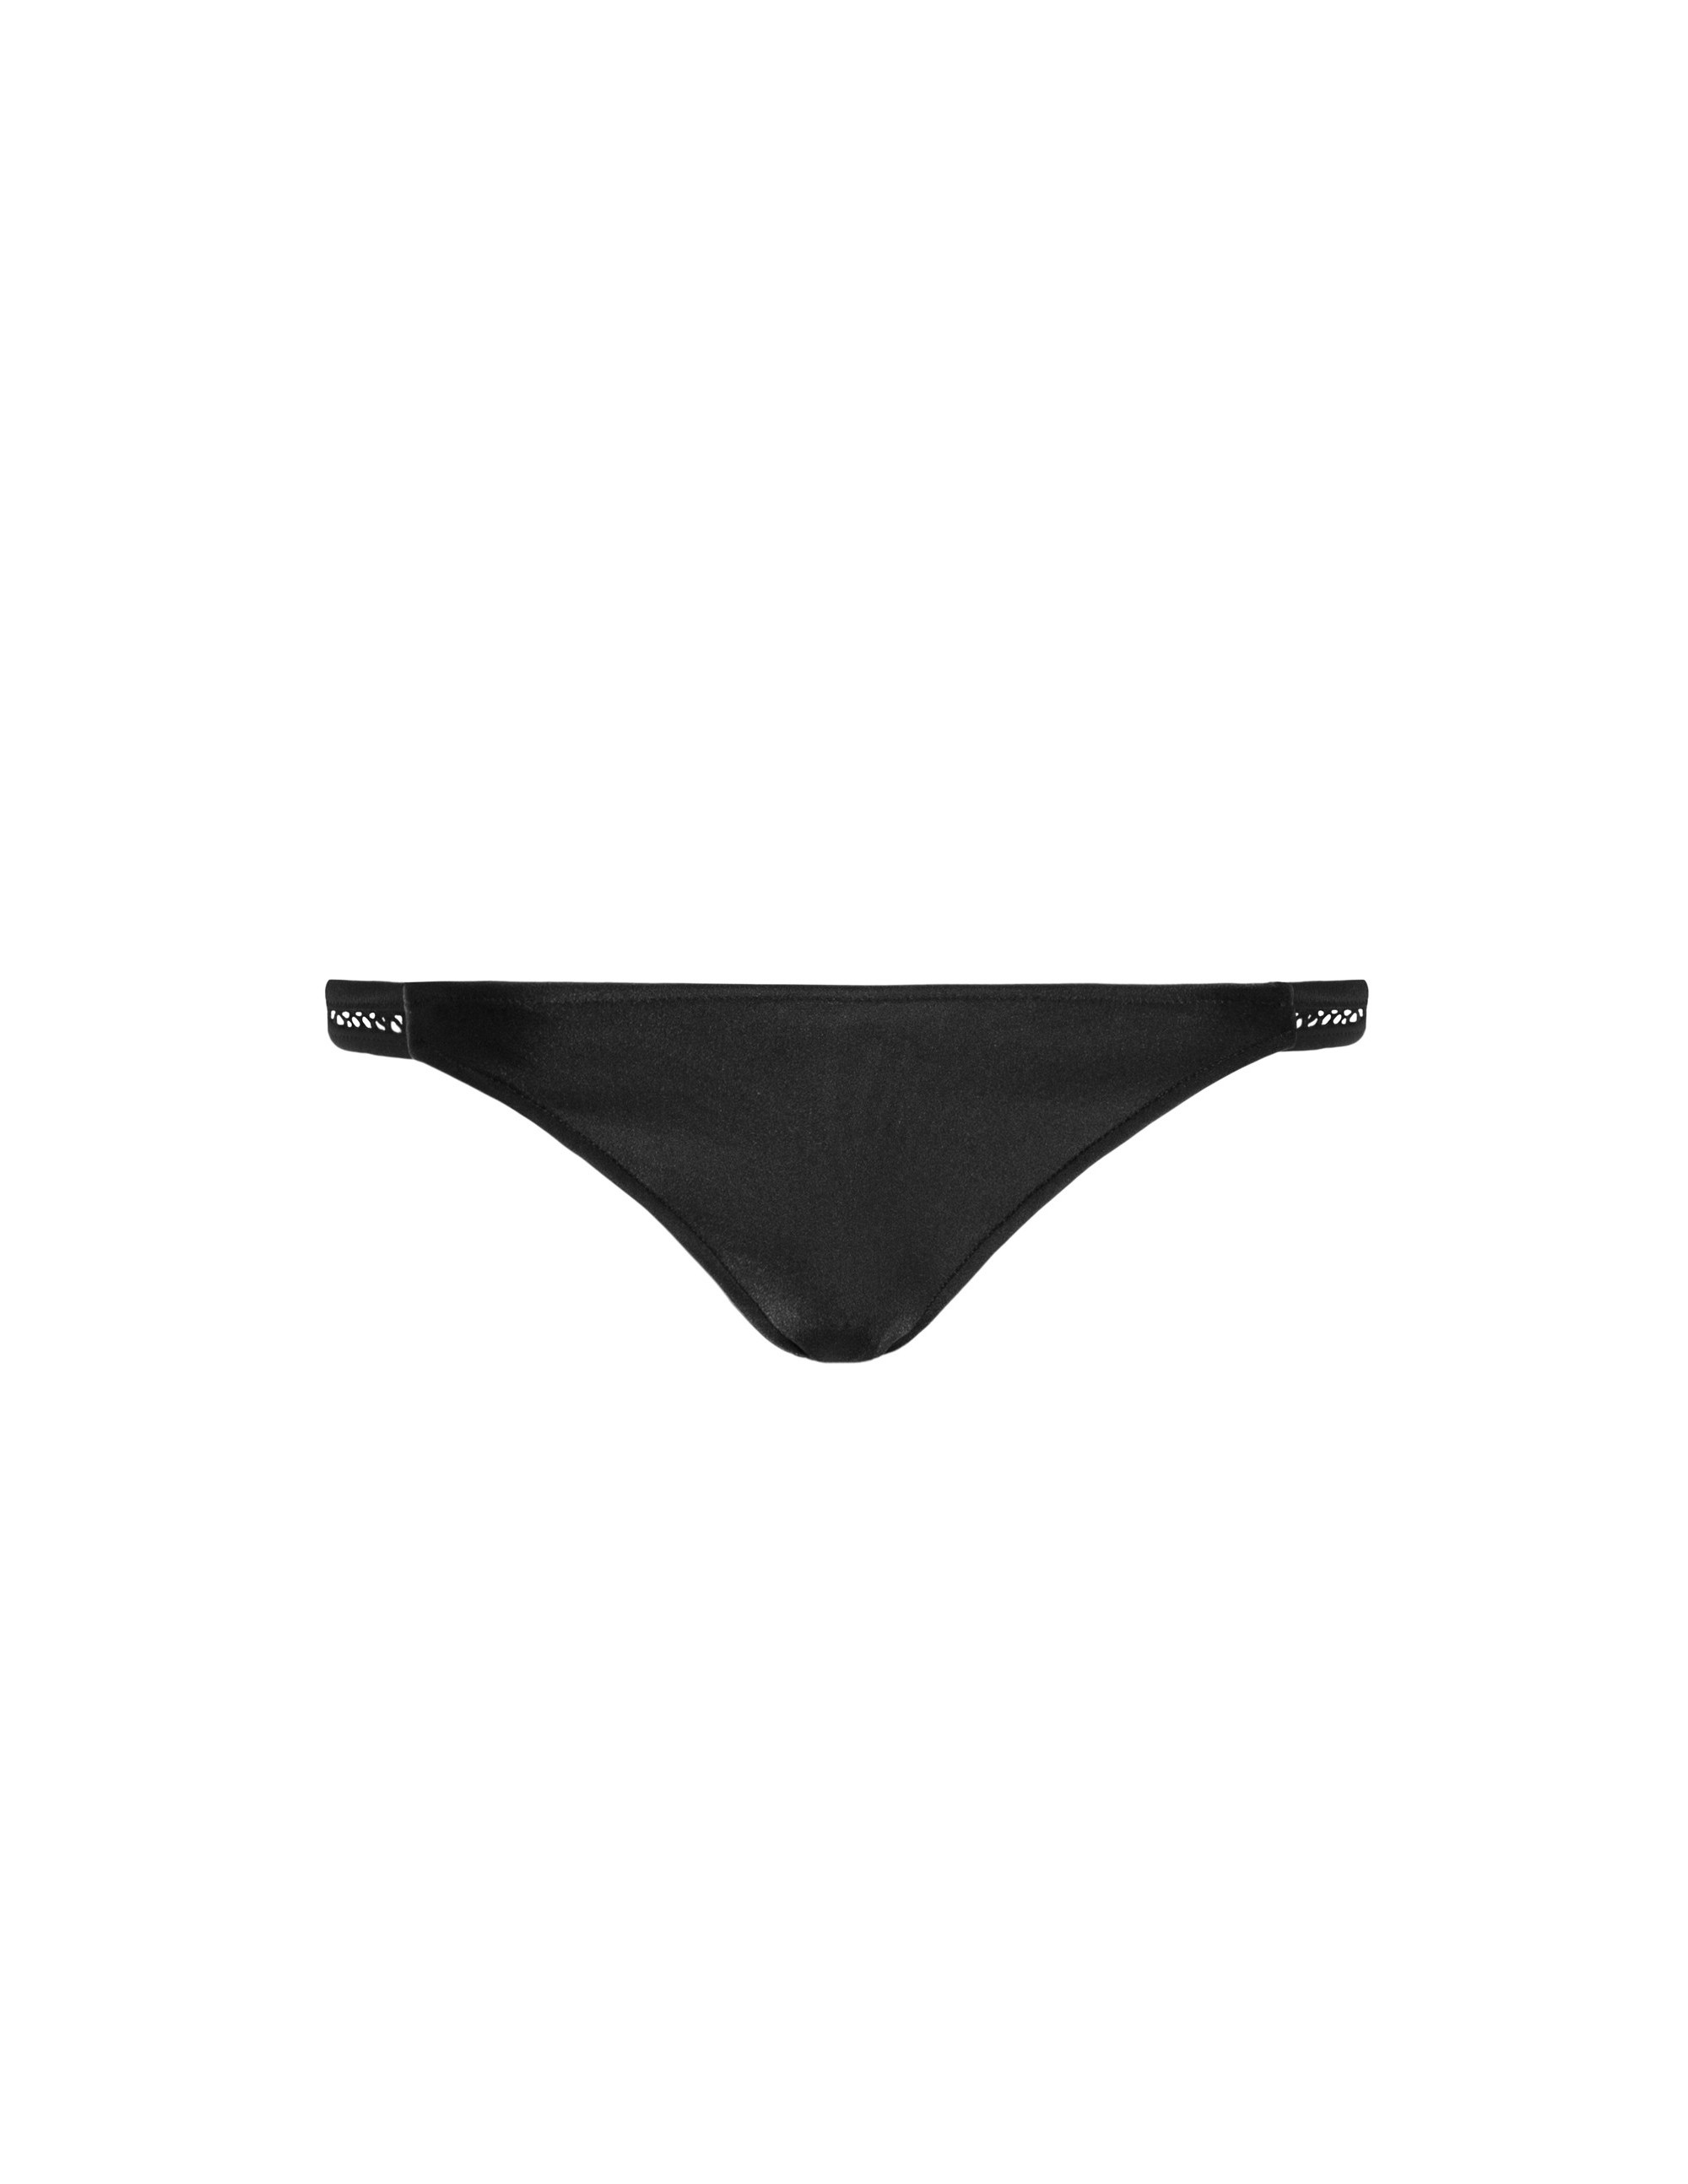 ANAMUR bikini bottom - MATTE BLACK